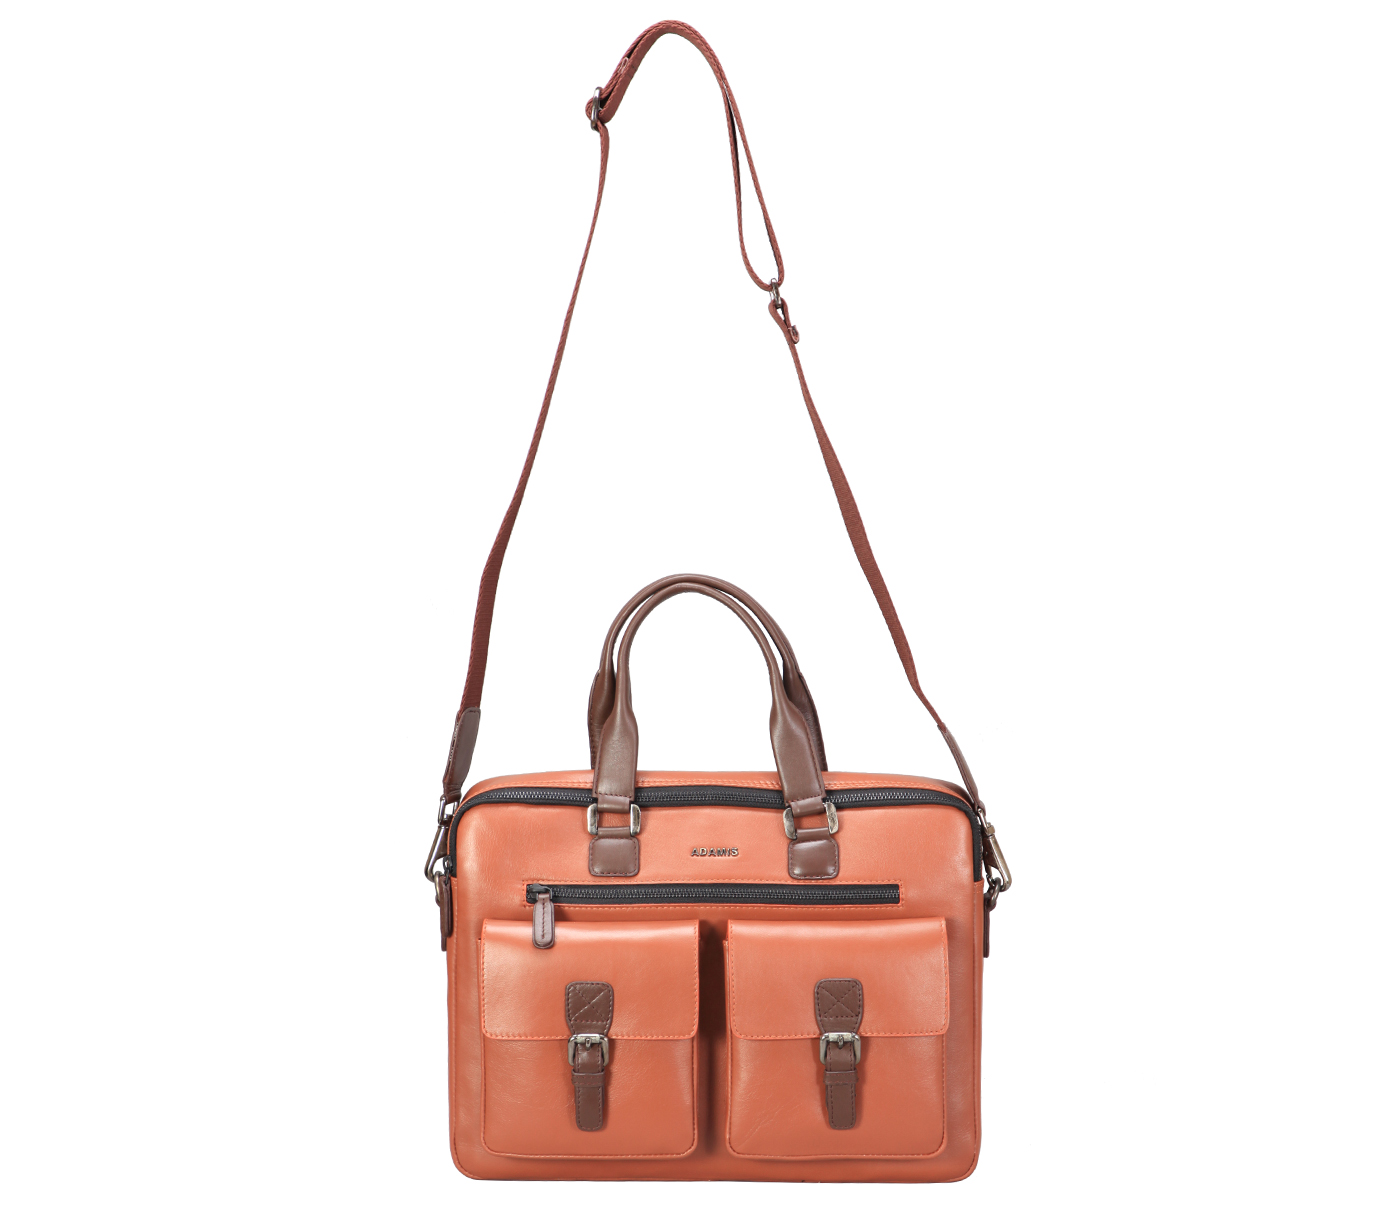 Portfolio / Laptop Bag-Austin-Laptop, portfolio office executive bag in Genuine Leather - Tan/Brown